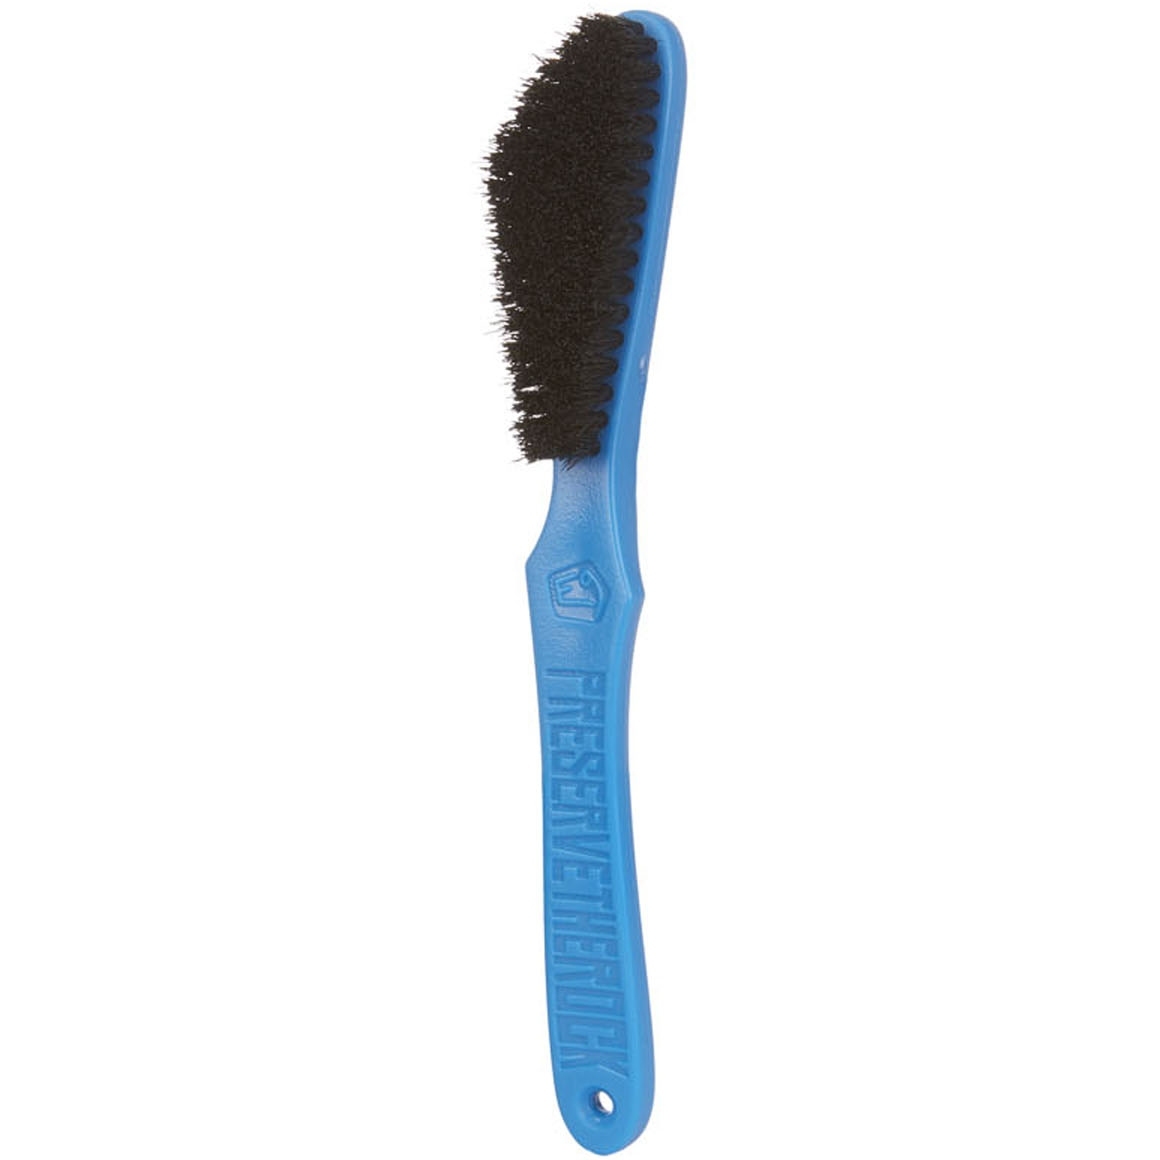 Productfoto van E9 Brush Klimborstel - Blauw